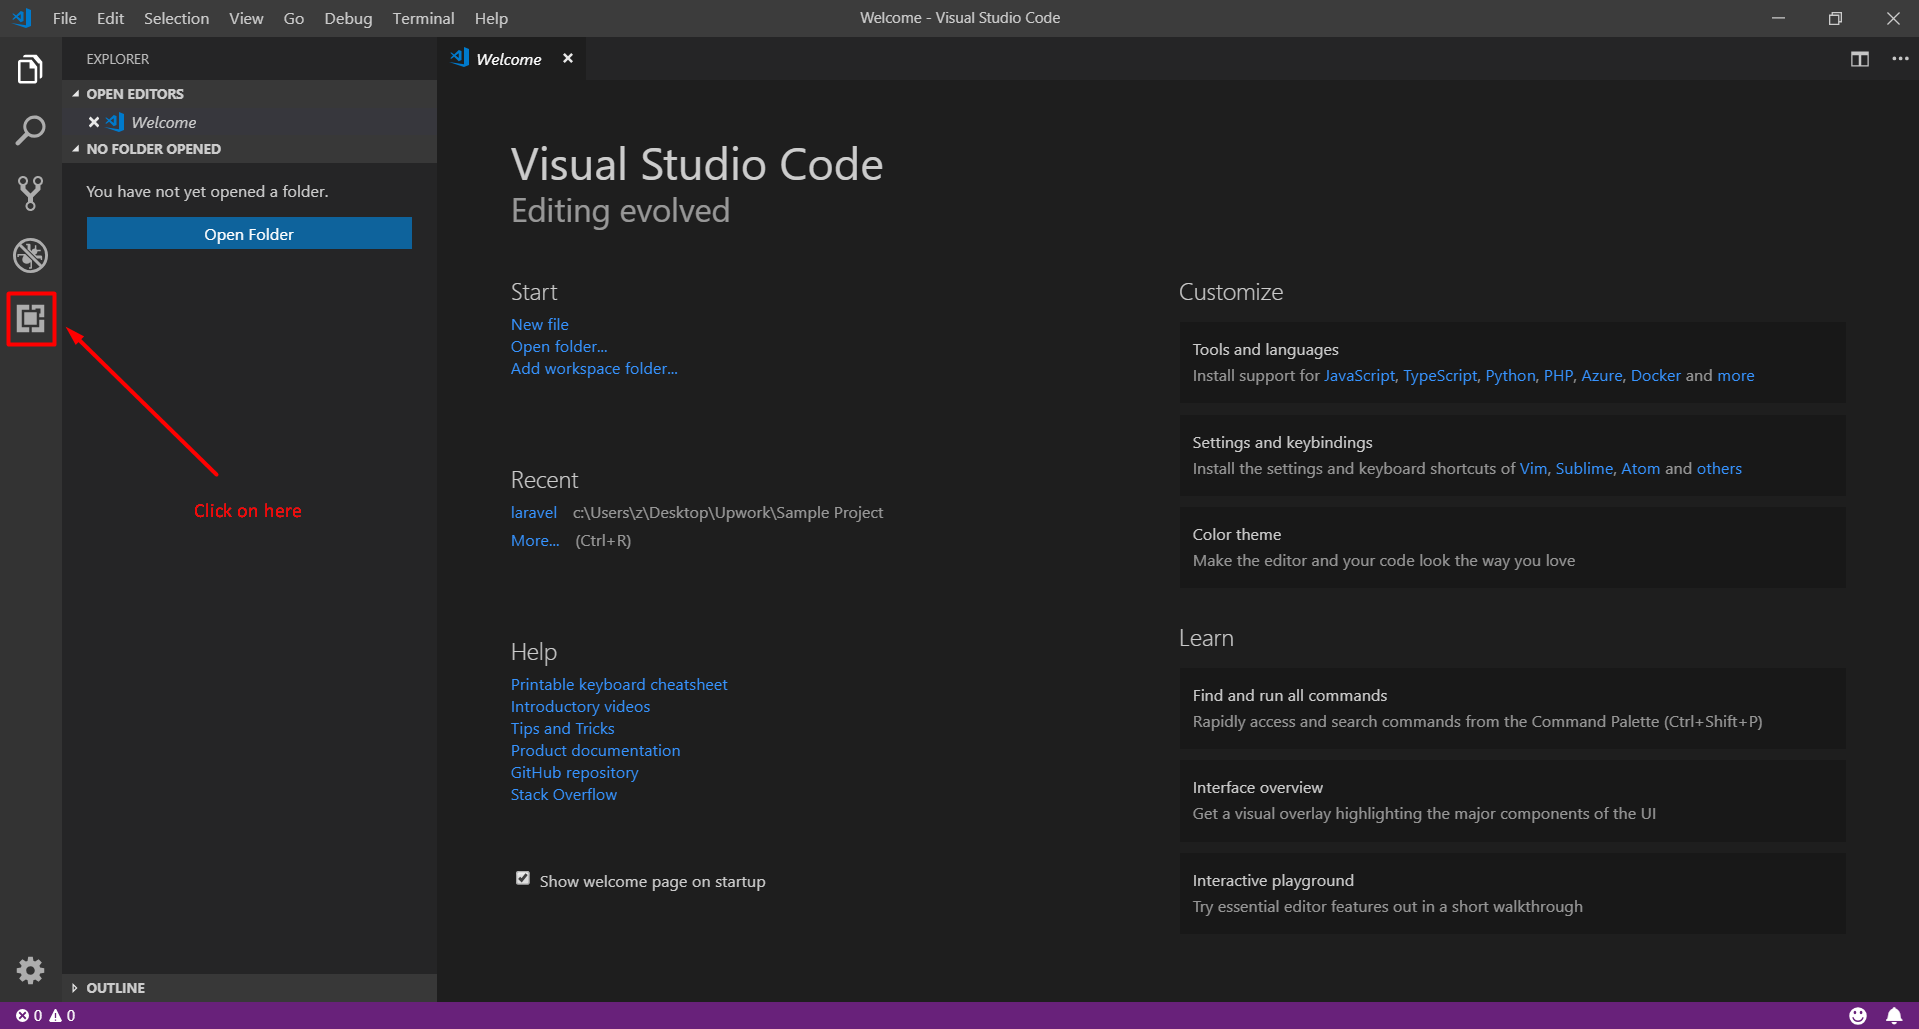 how to download visual studio code